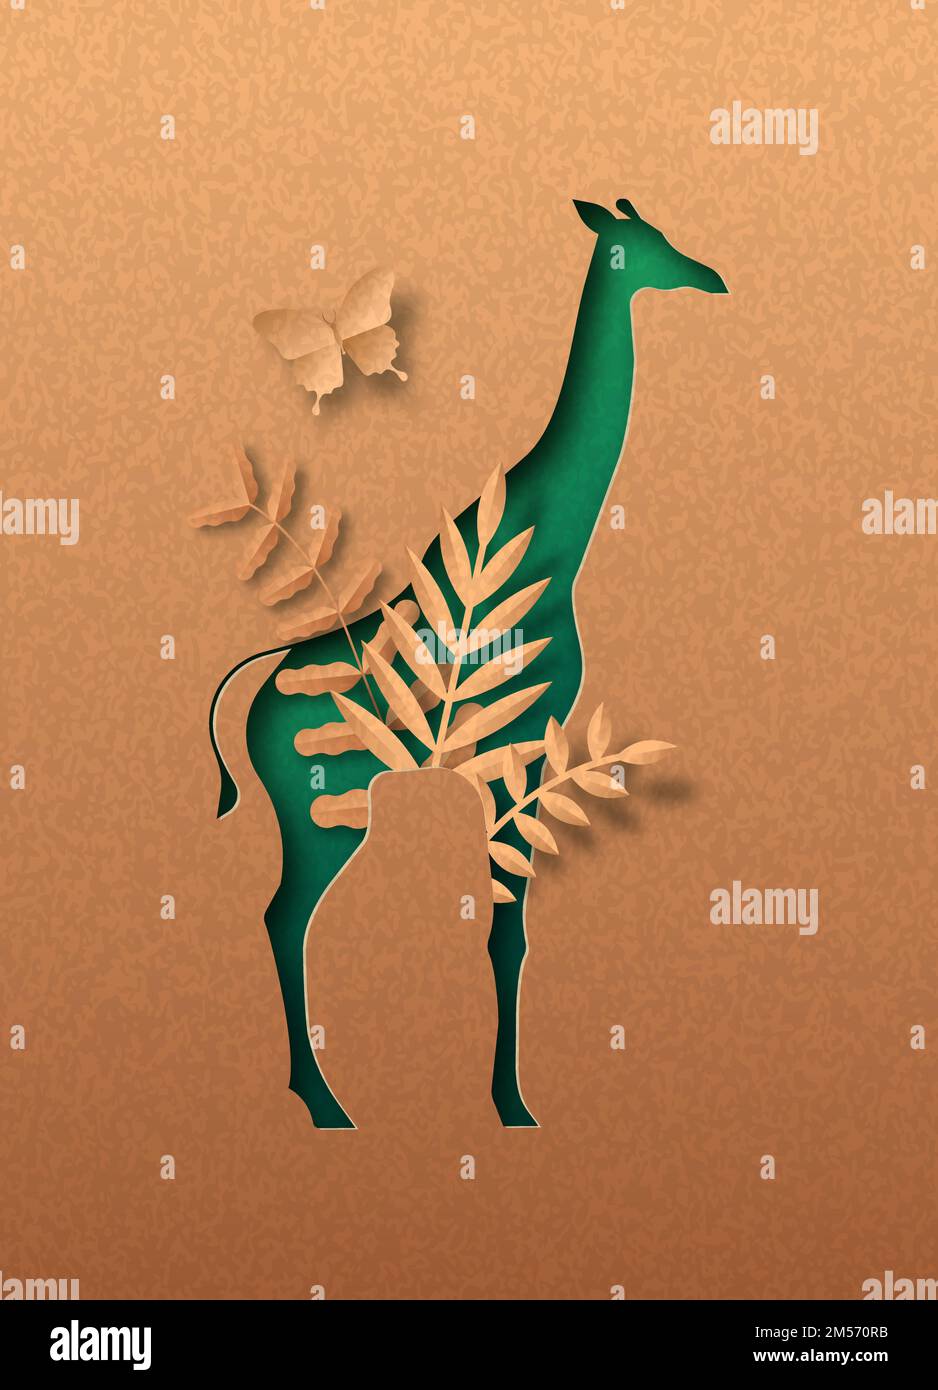 Grüne Giraffe Tier isoliert papercut Silhouette mit tropischen Pflanzen Blatt innen. Recycling Papier Textur Ausschnitt Konzept für afrika Safari, Tierwelt c Stock Vektor